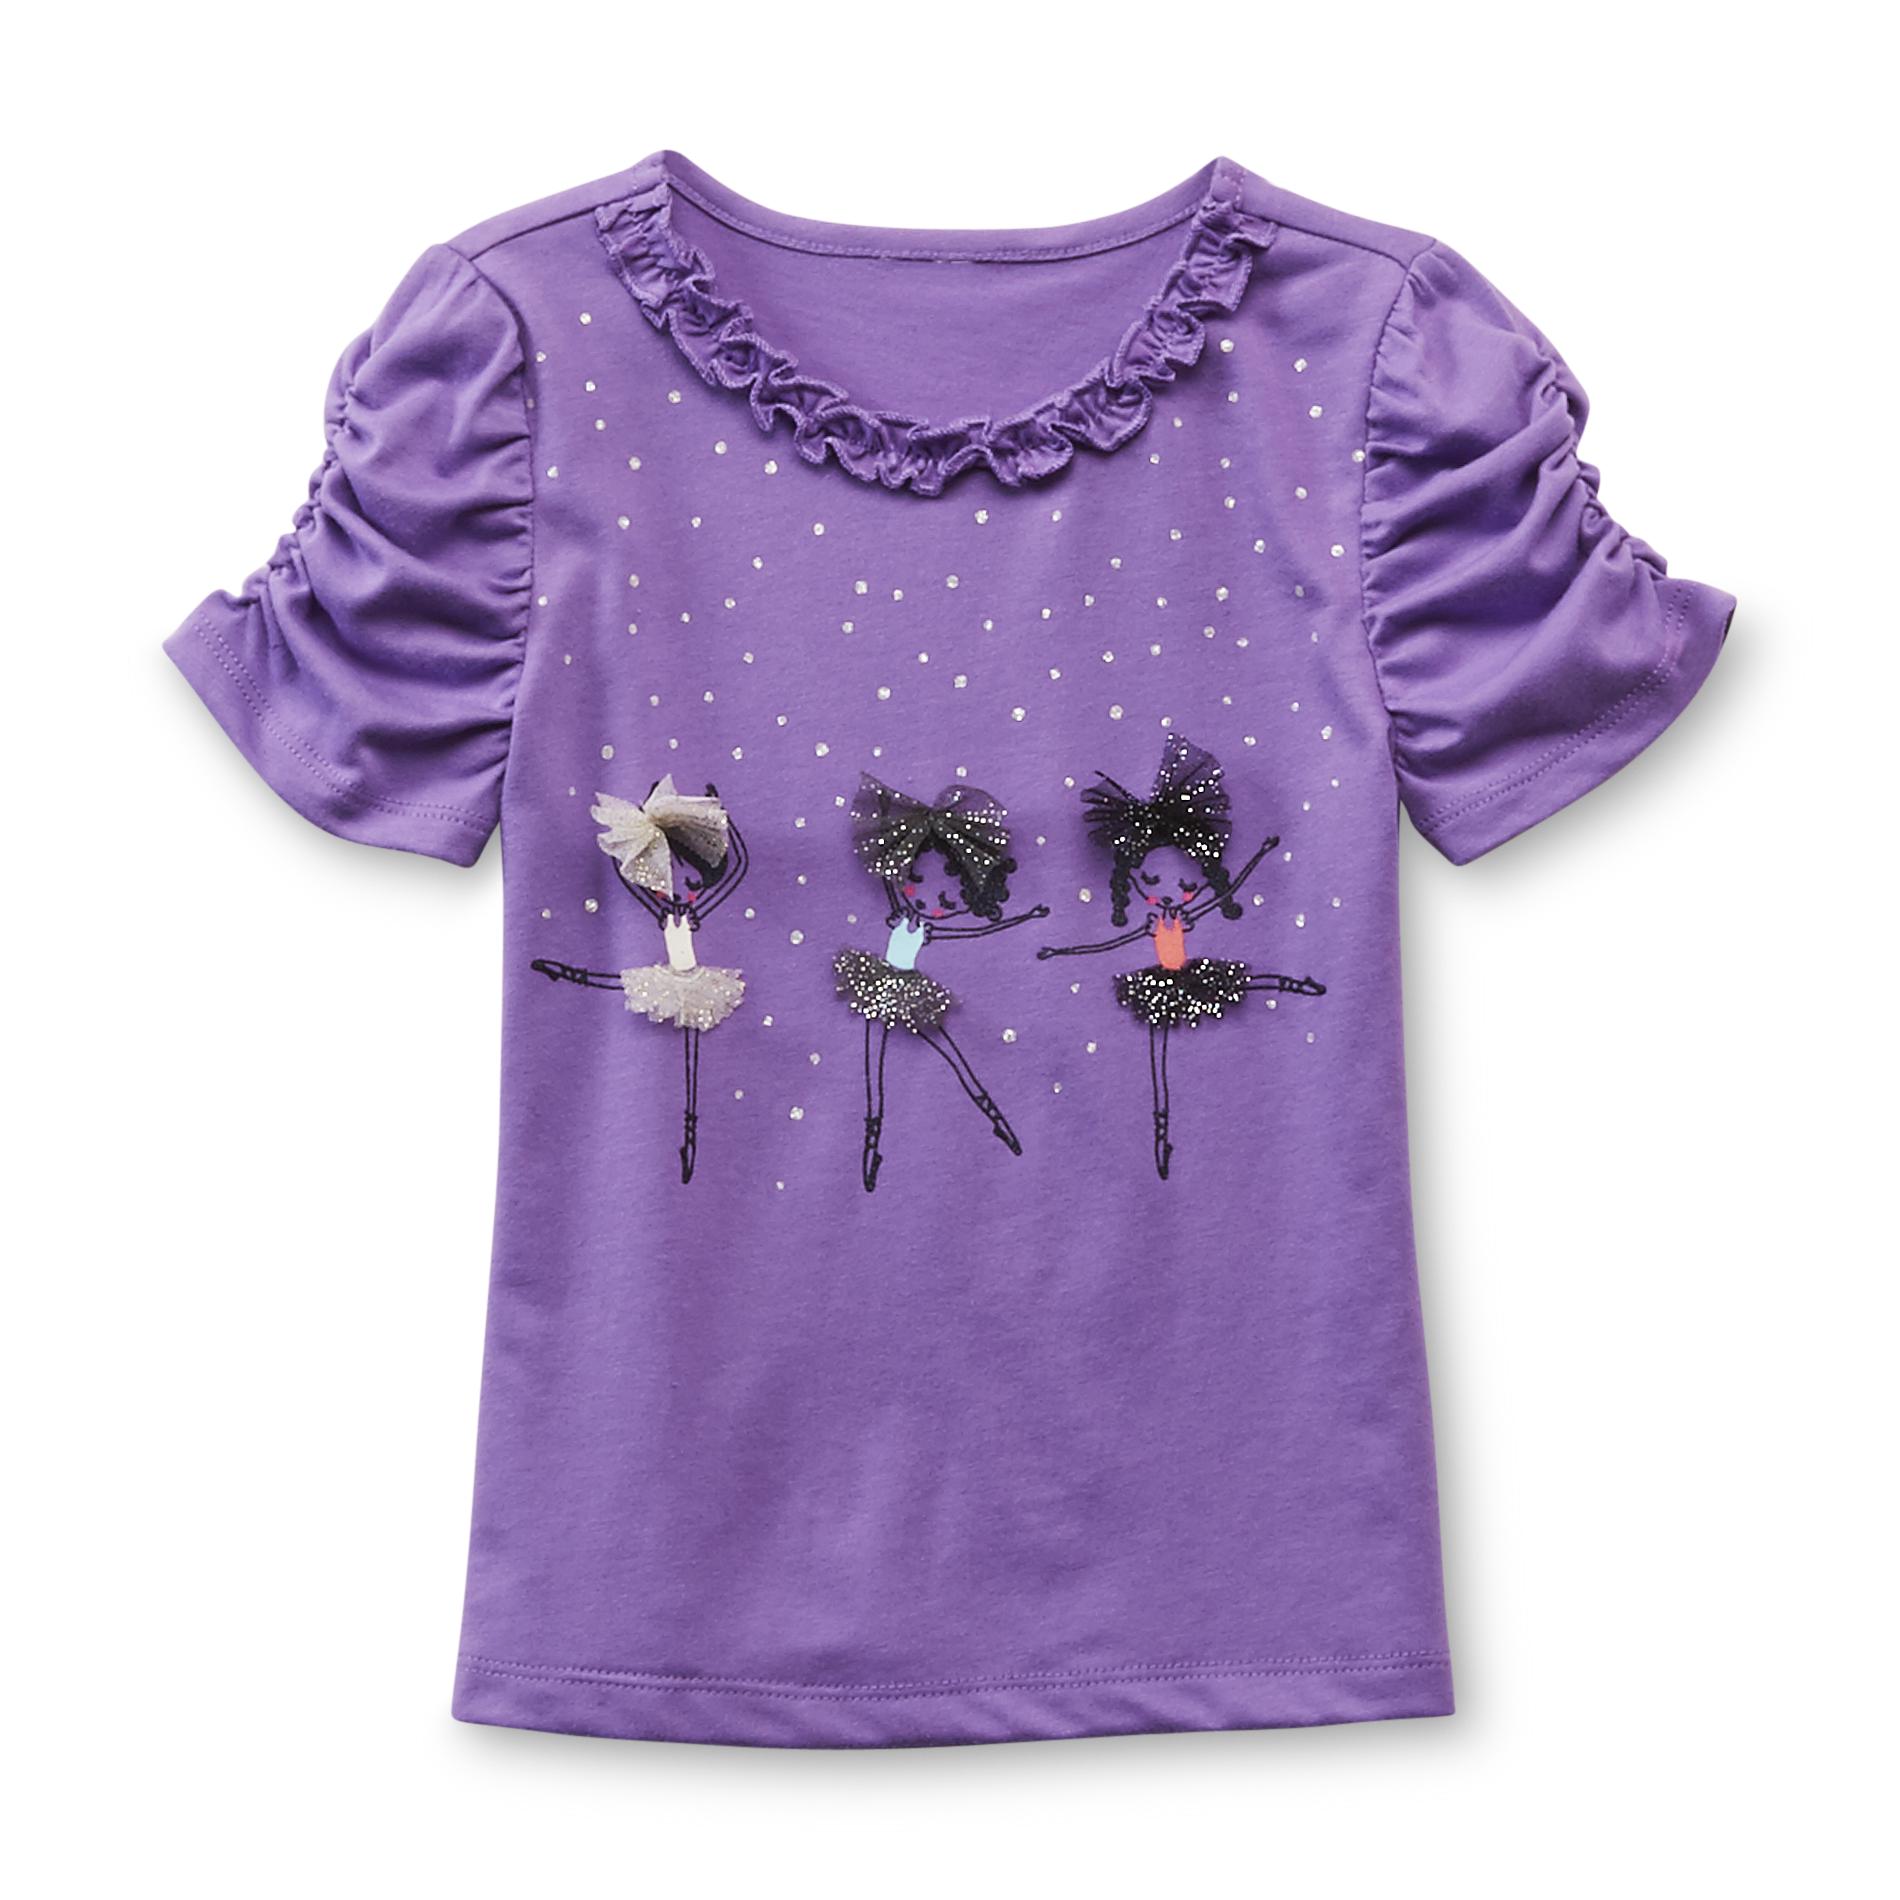 WonderKids Toddler Girl's Short-Sleeve Graphic Top - Ballerinas